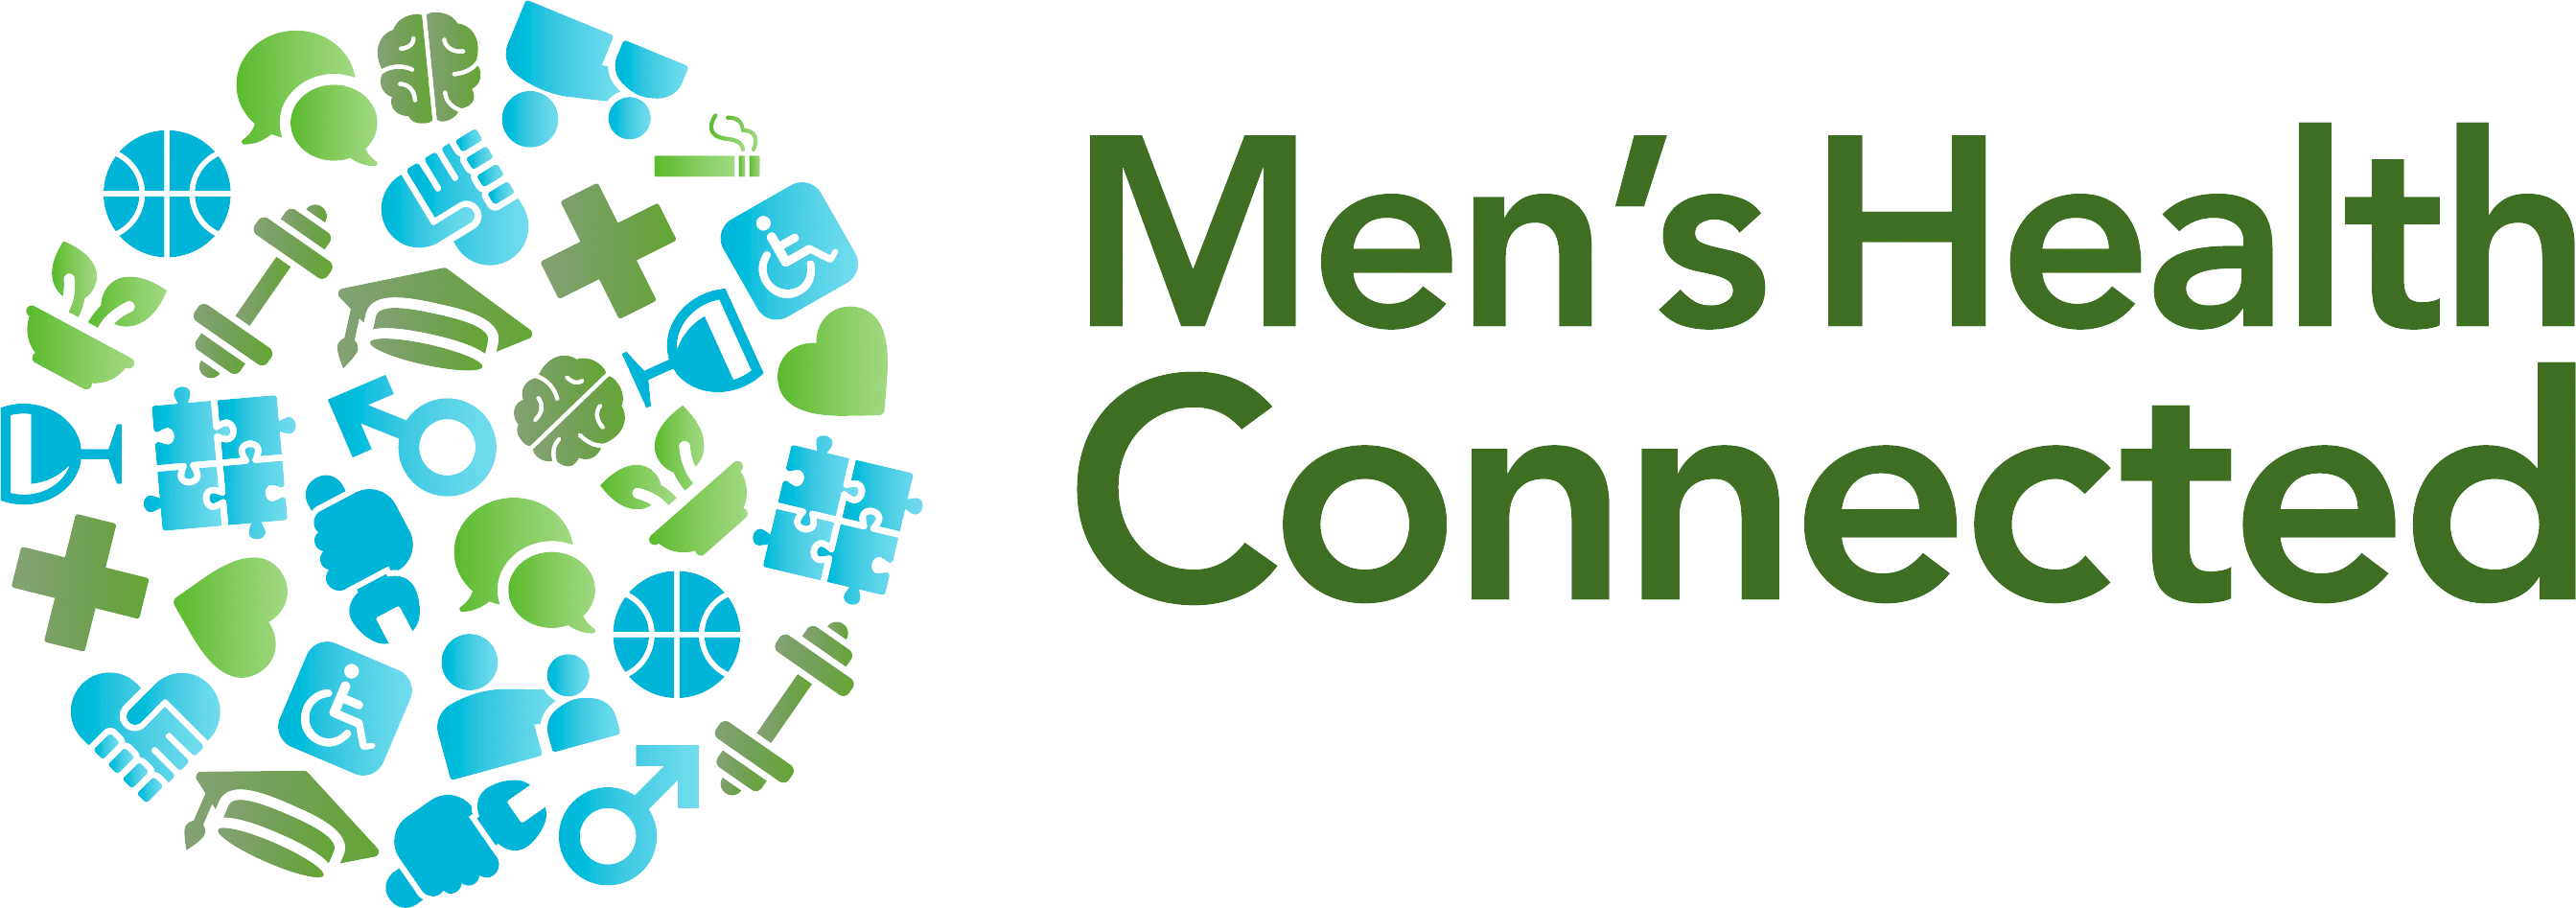 Men’s Health Connected